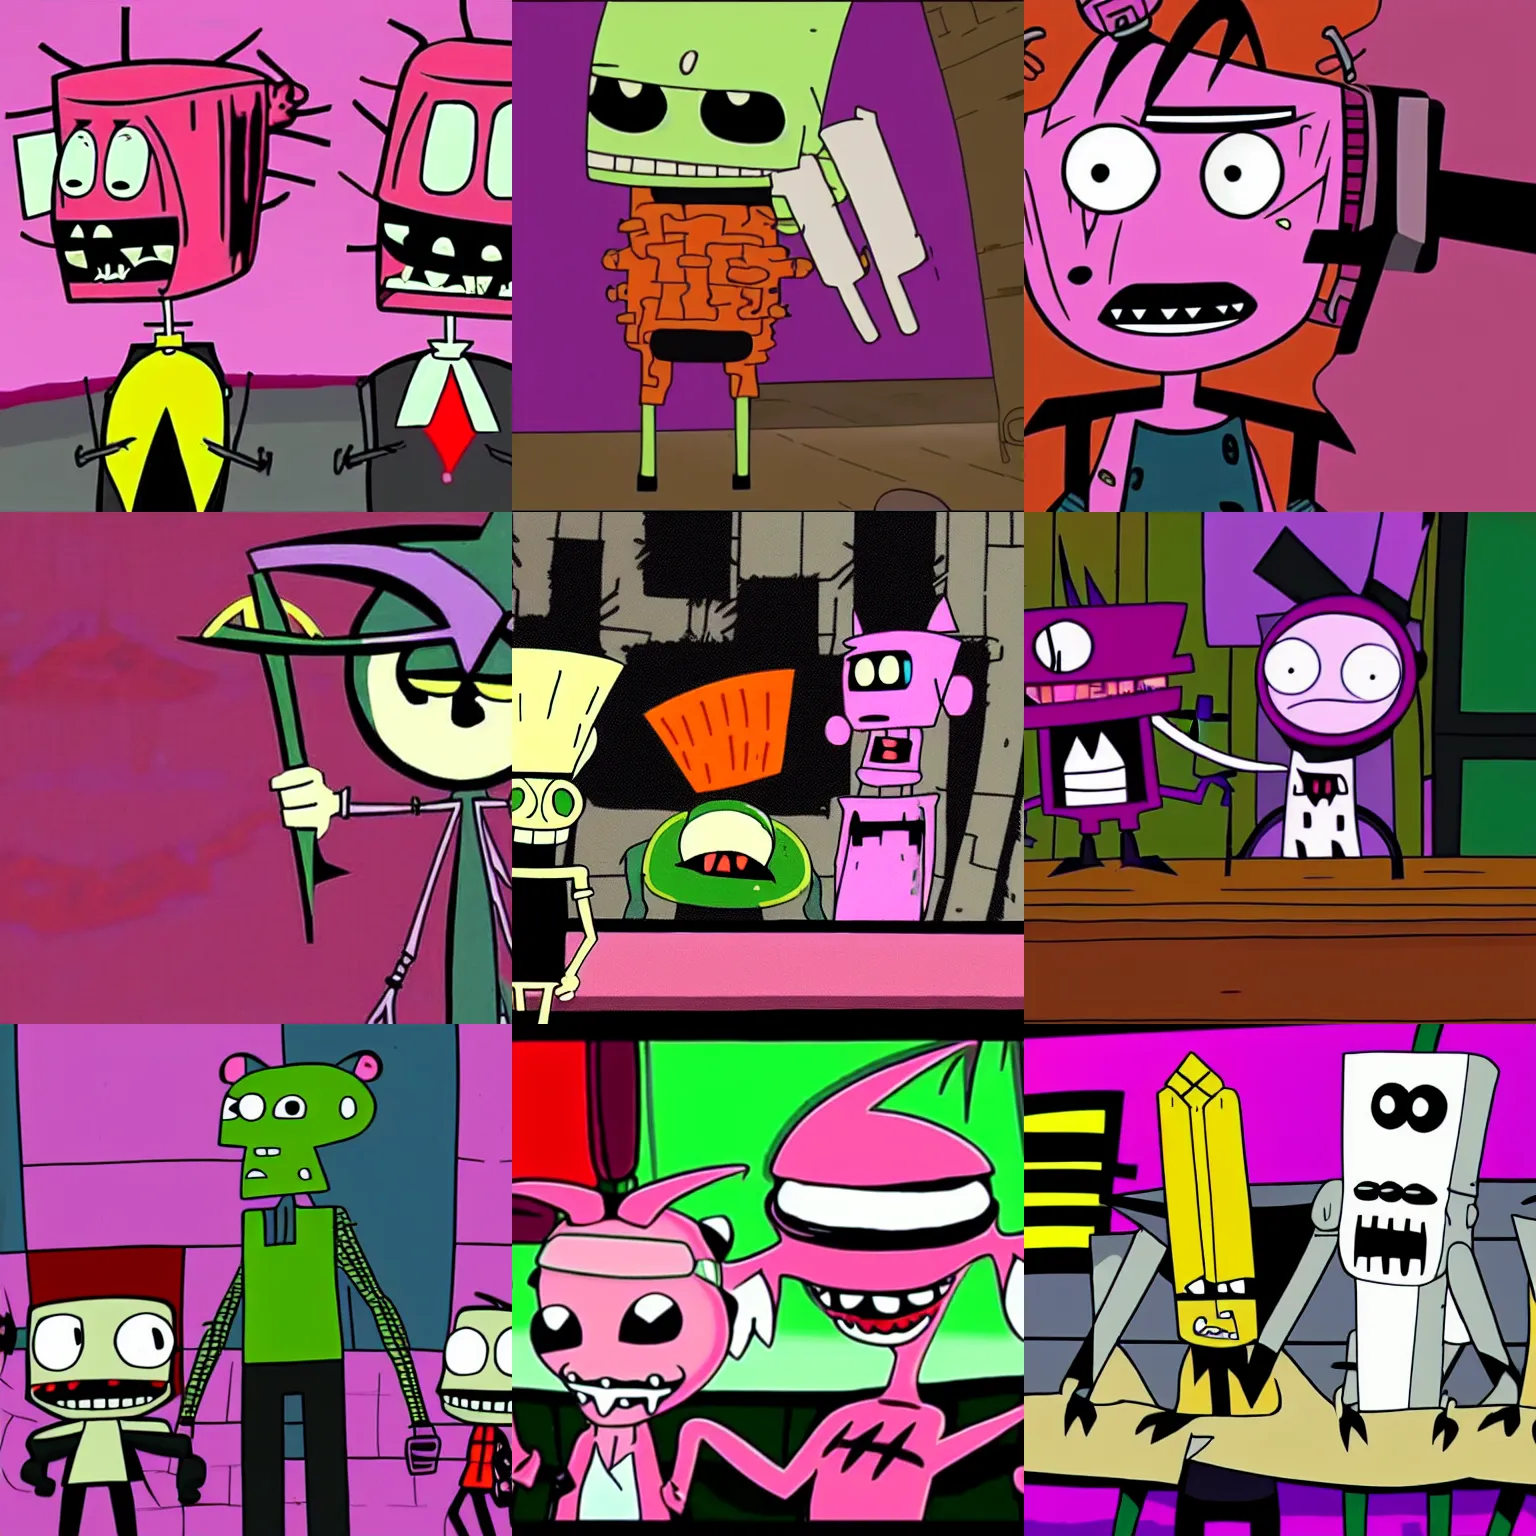 Prompt: a screen from an episode of Invader Zim featuring Gordon Ramsay, Jhonen Vasquez cartoon